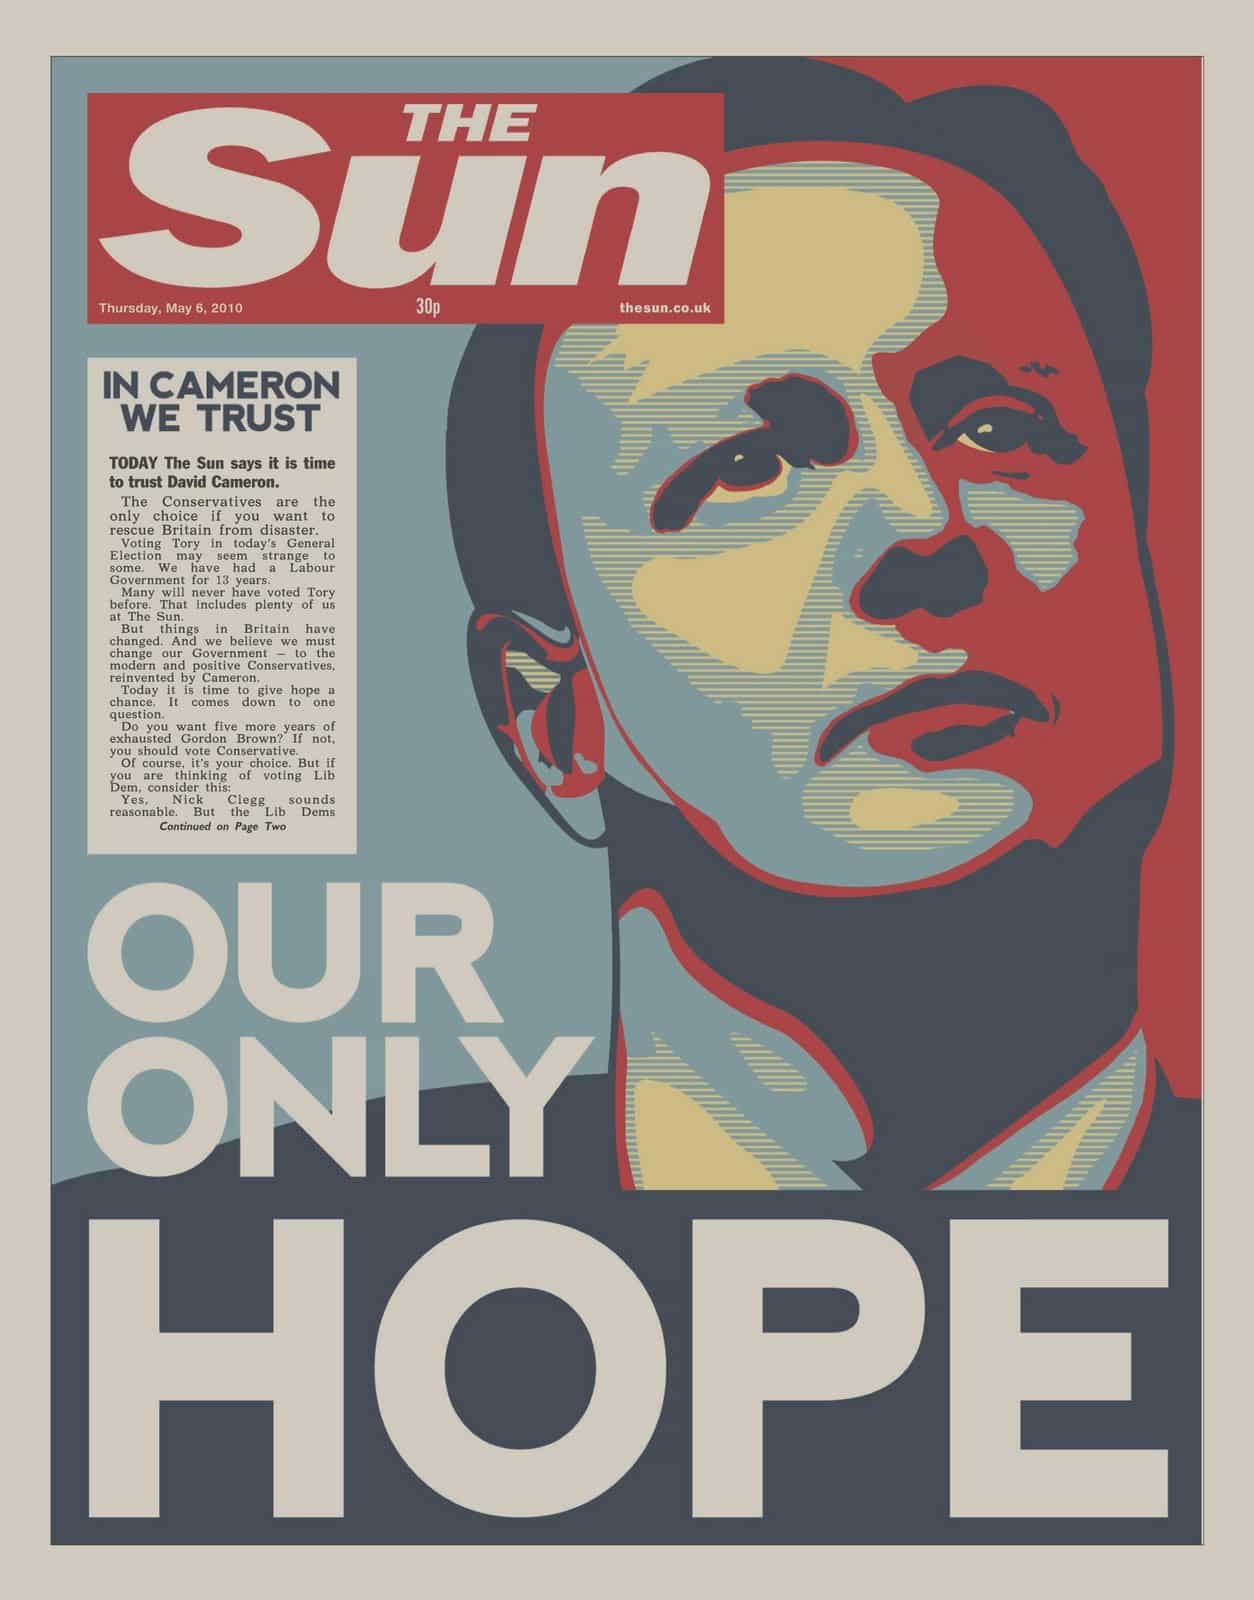 Sub-headline: “TODAY The Sun says it’s time to trust David Cameron.” 